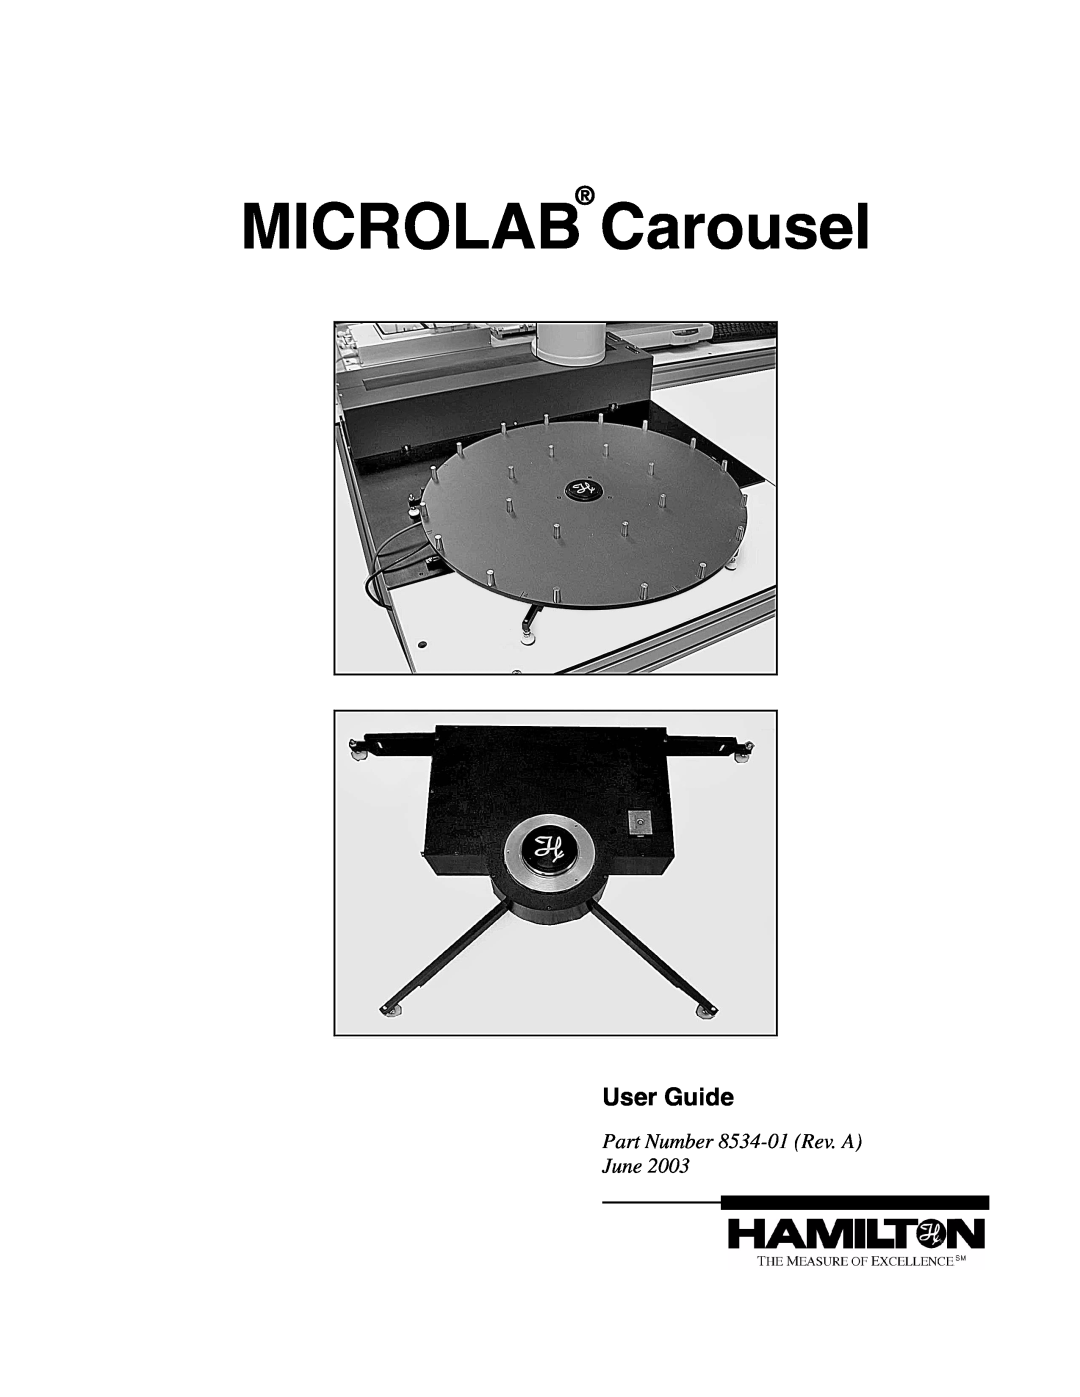 Hamilton Electronics manual MICROLAB Carousel, User Guide, Part Number 8534-01Rev. A June 